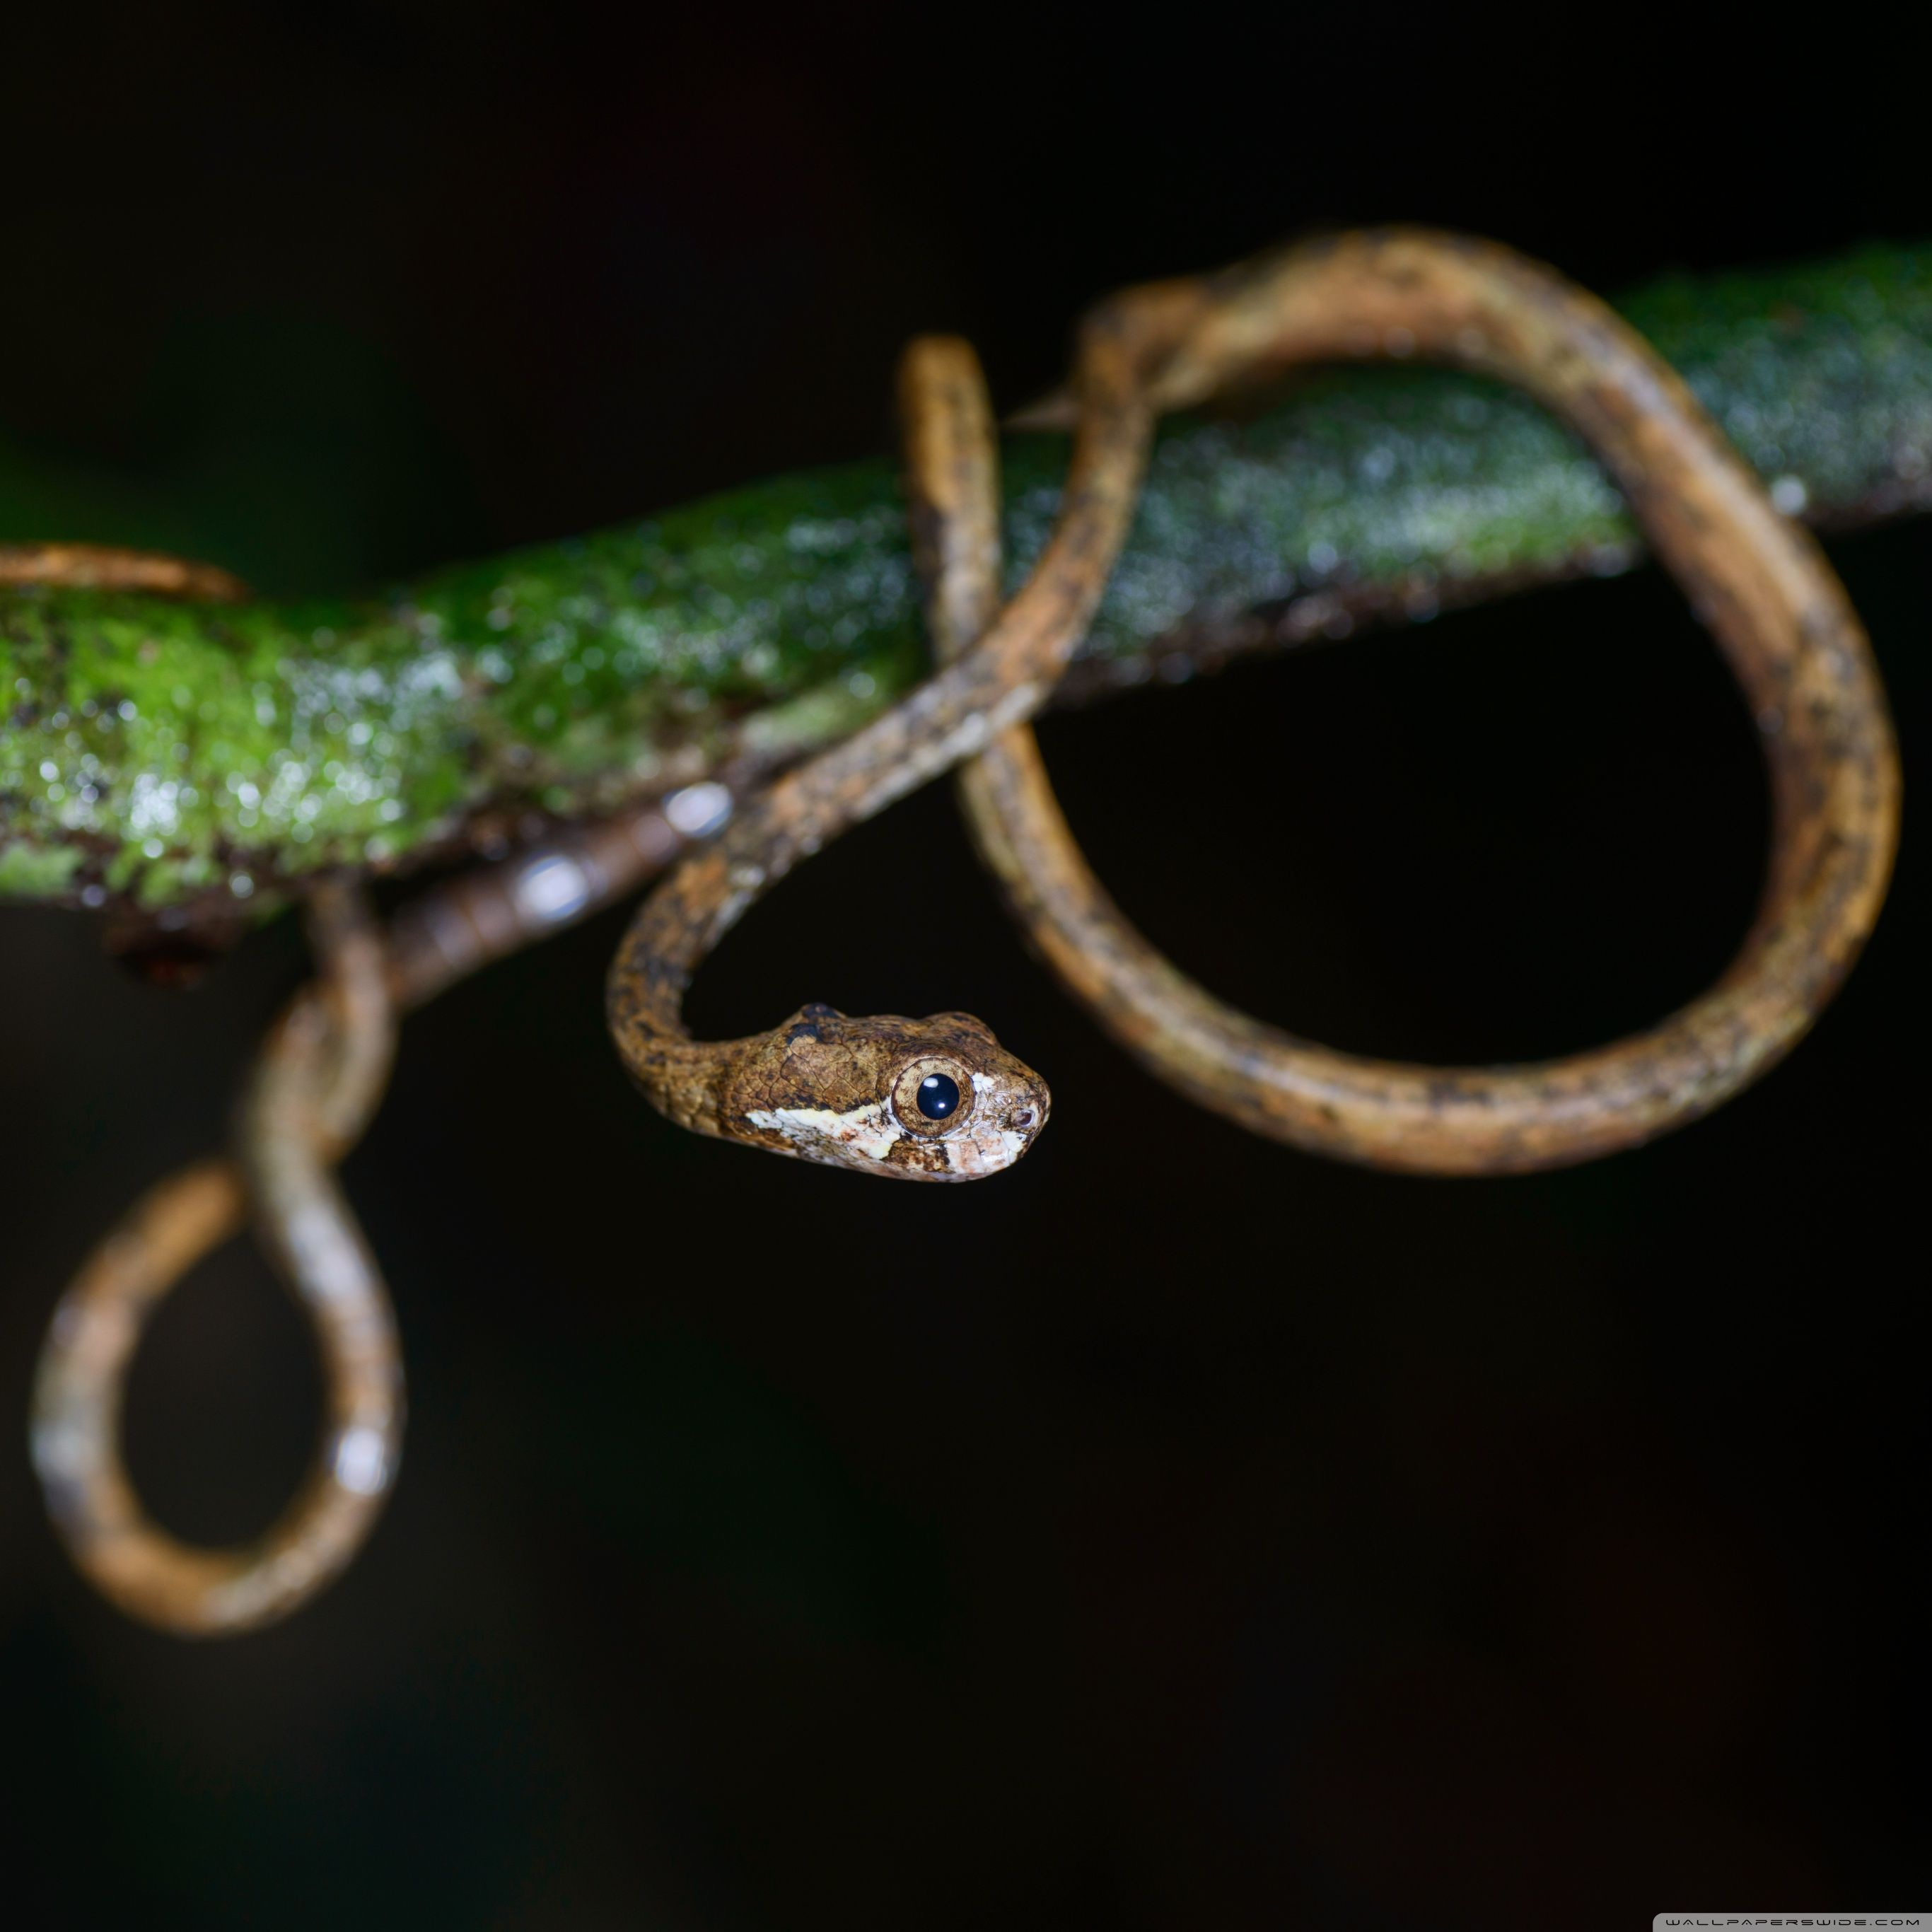 Cute Snake, Aplopeltura Boa, Tree .wallpaperwide.com